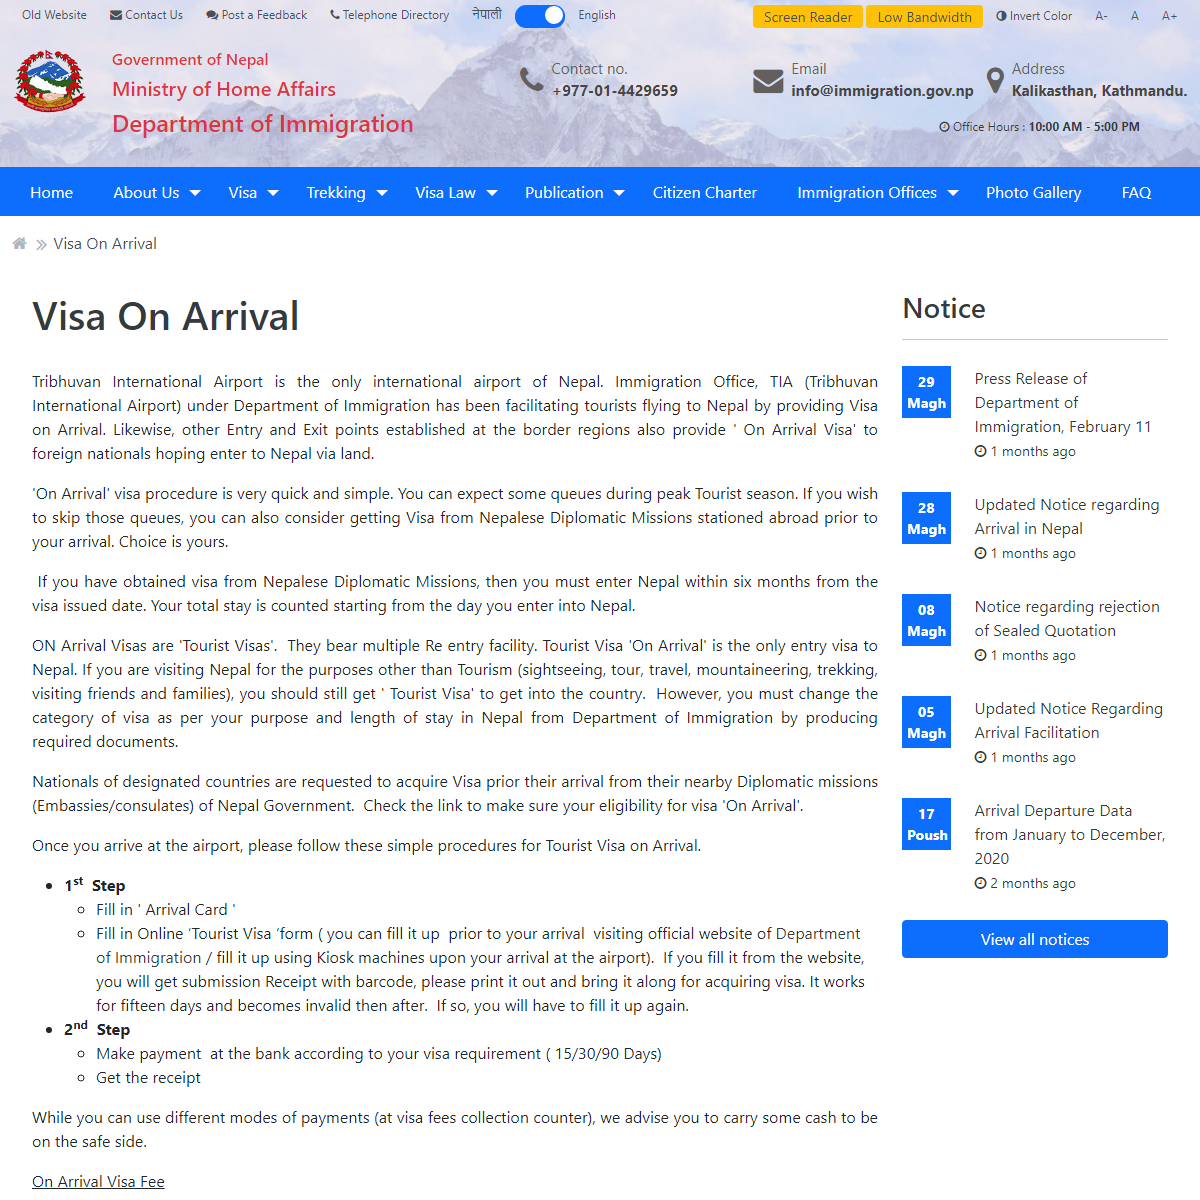 A complete backup of https://www.immigration.gov.np/page/visa-on-arrival